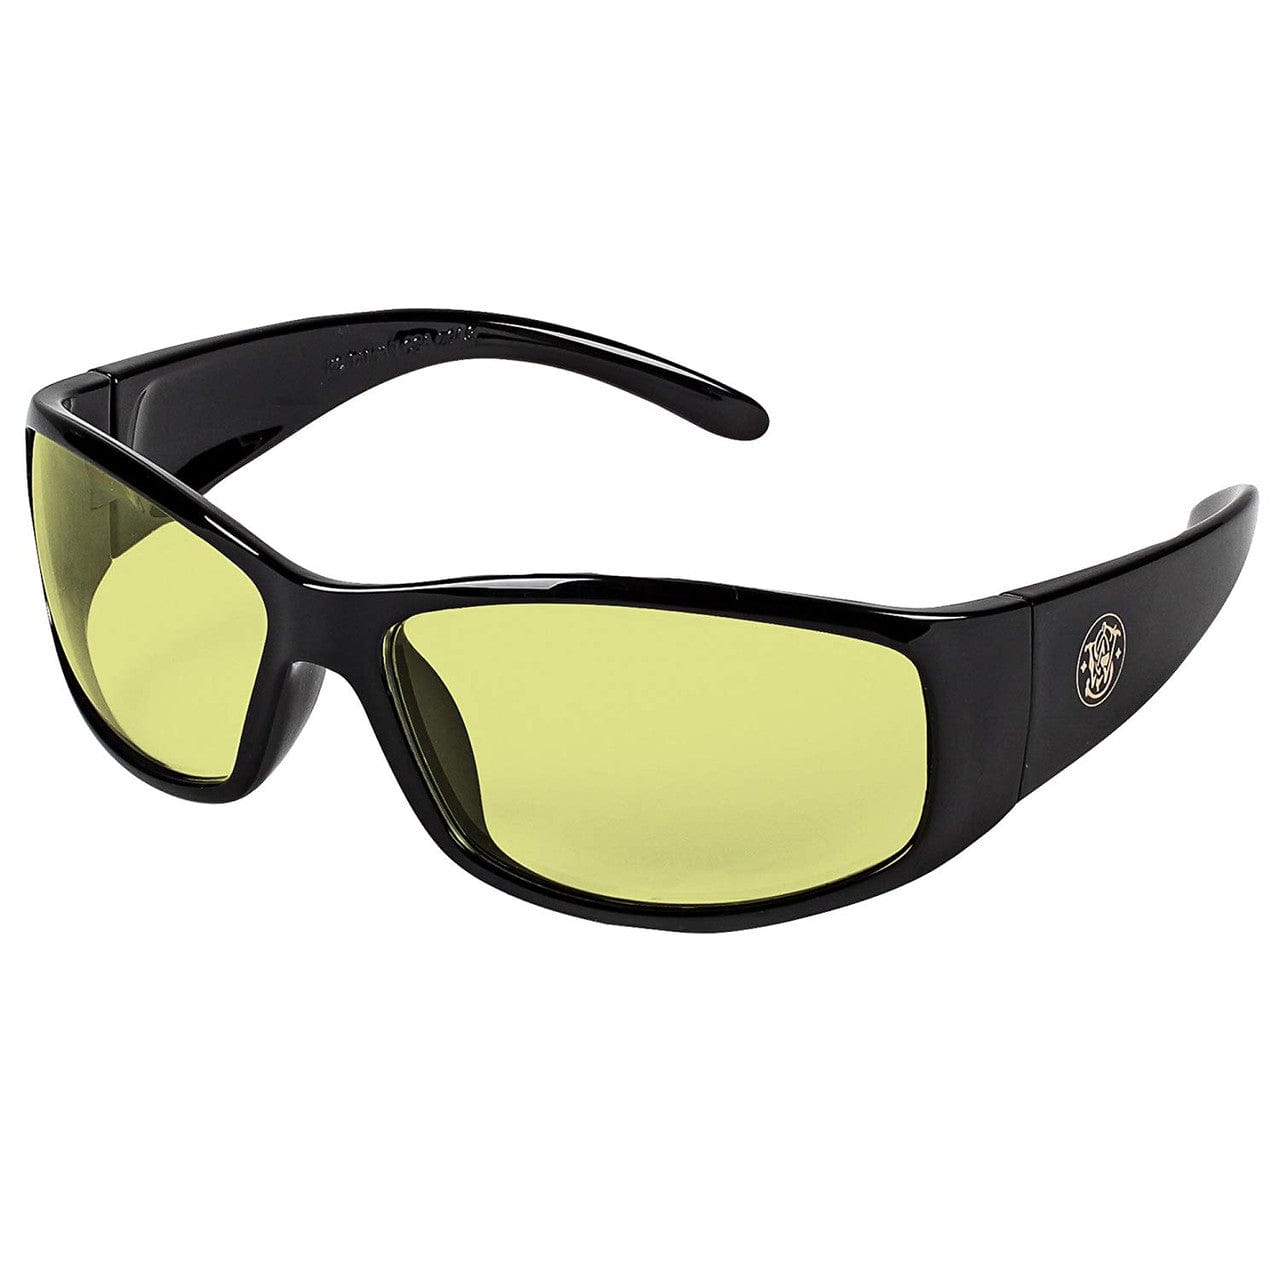 Smith & Wesson Elite Safety Glasses Amber Anti-Fog Lens 21305